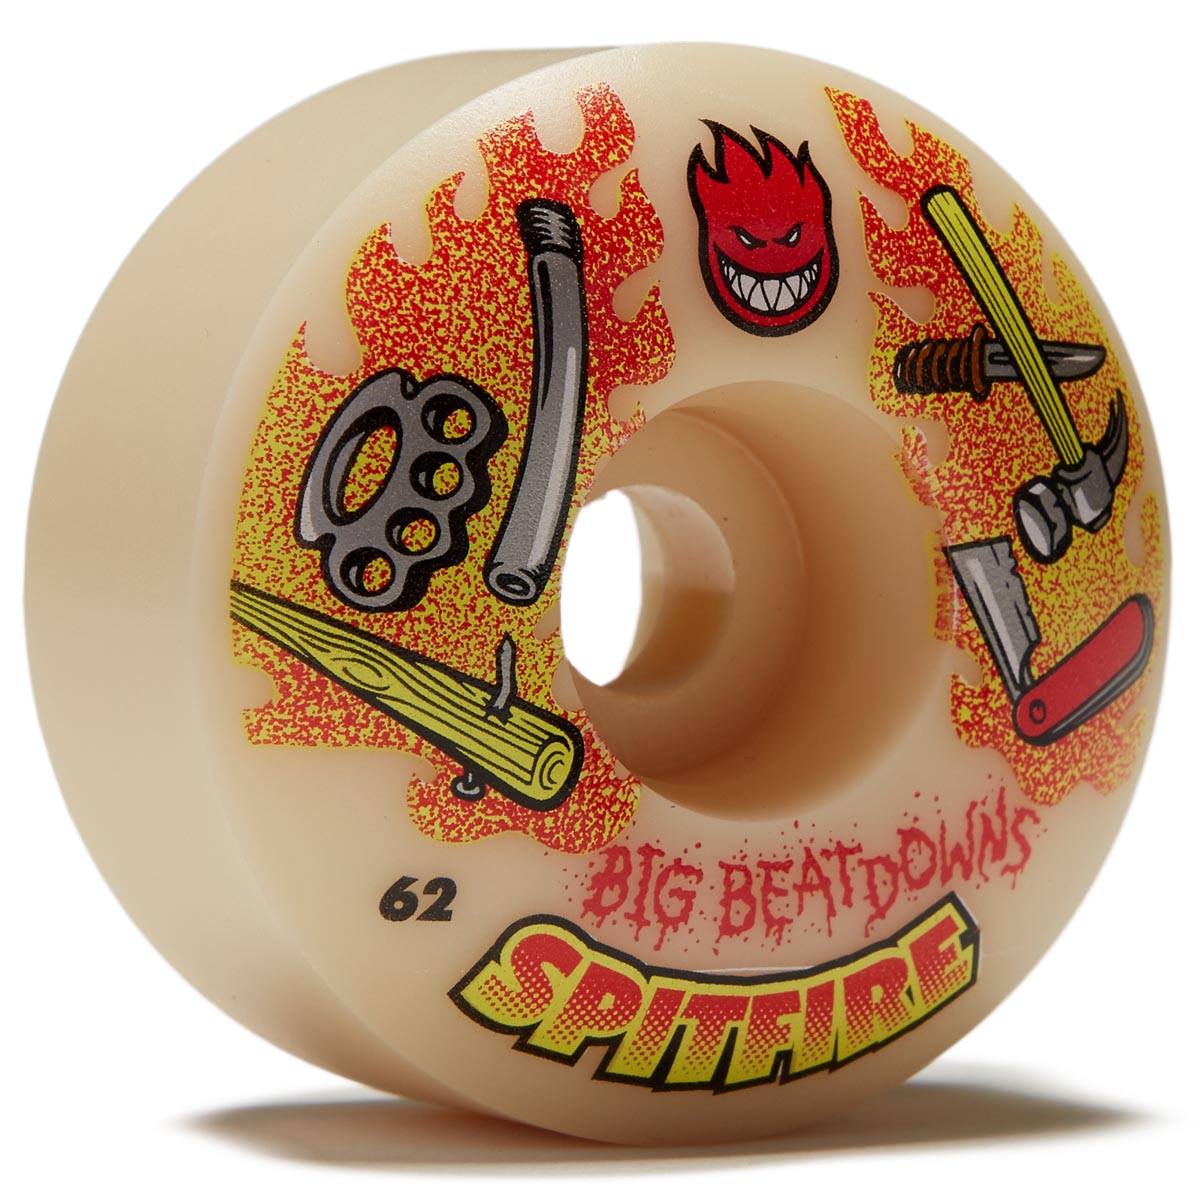 Spitfire F4 99 Big Beatdowns Classics Skateboard Wheels - 62mm image 1